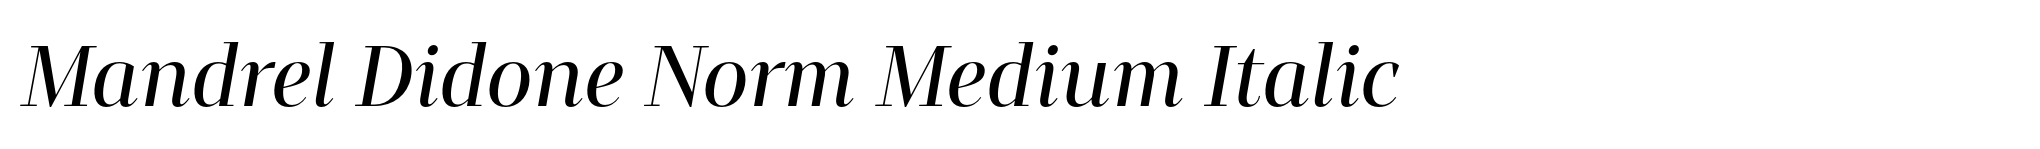 Mandrel Didone Norm Medium Italic image